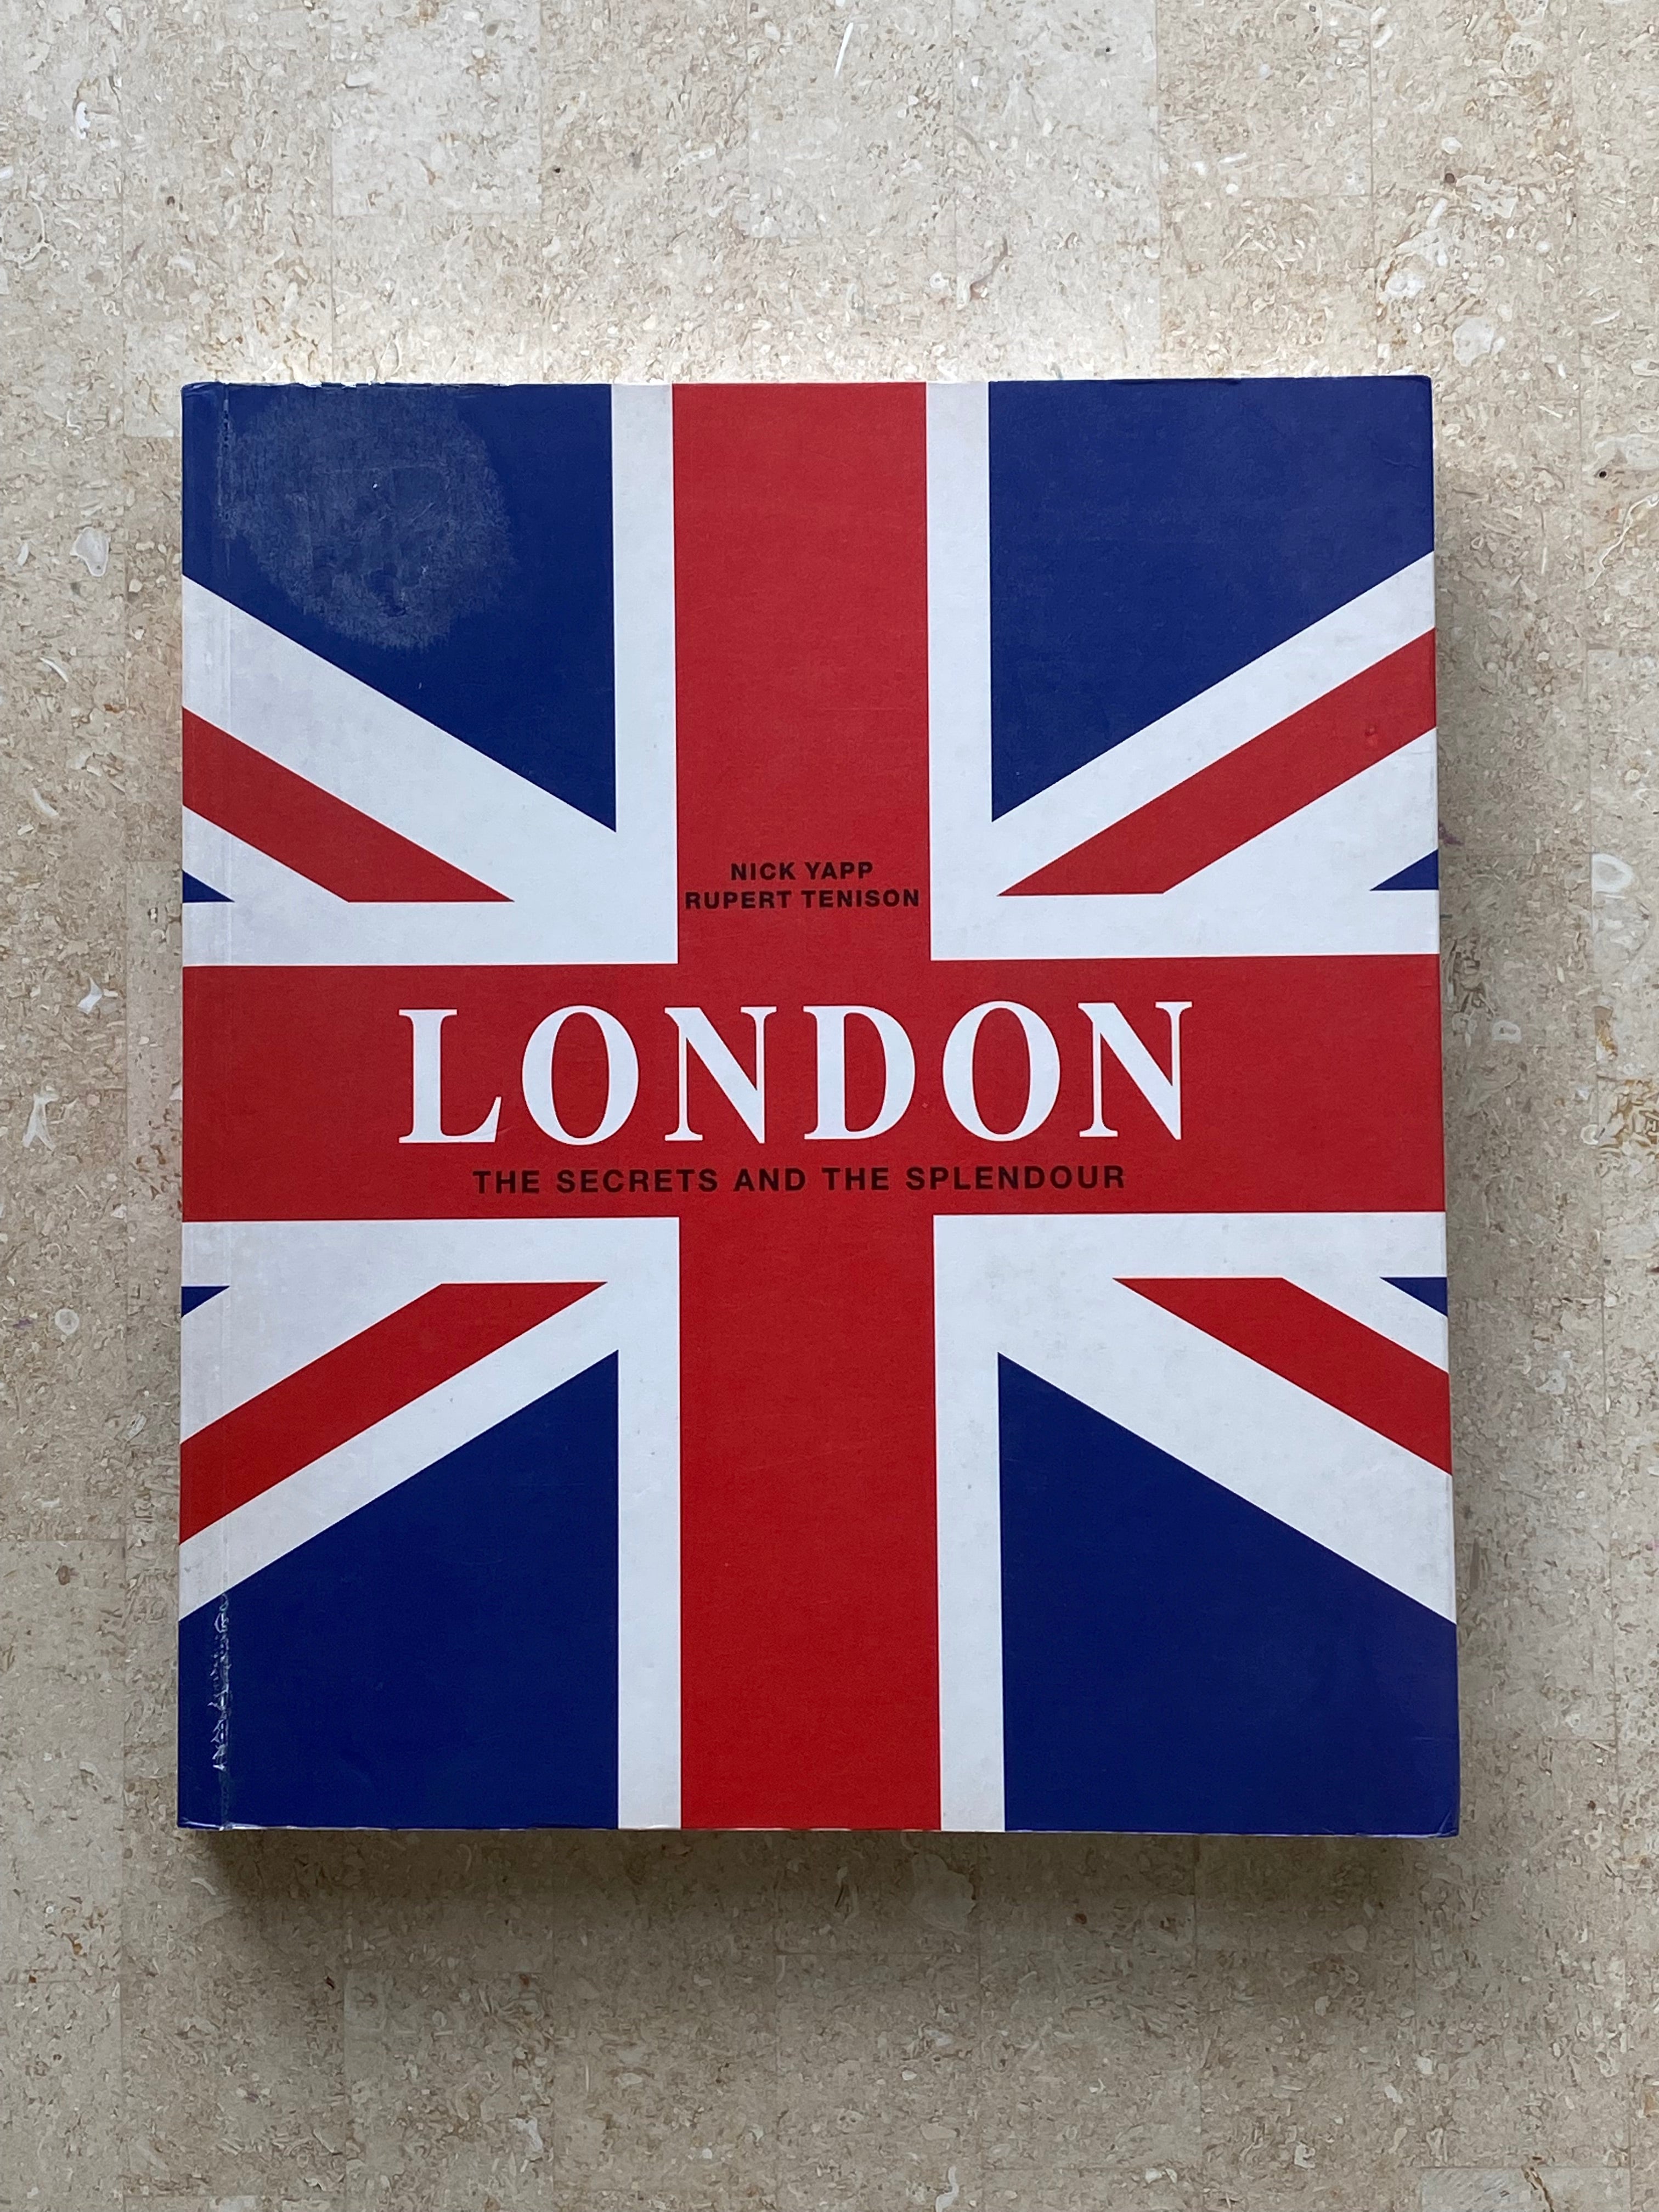 London: The Secrets and the Splendour